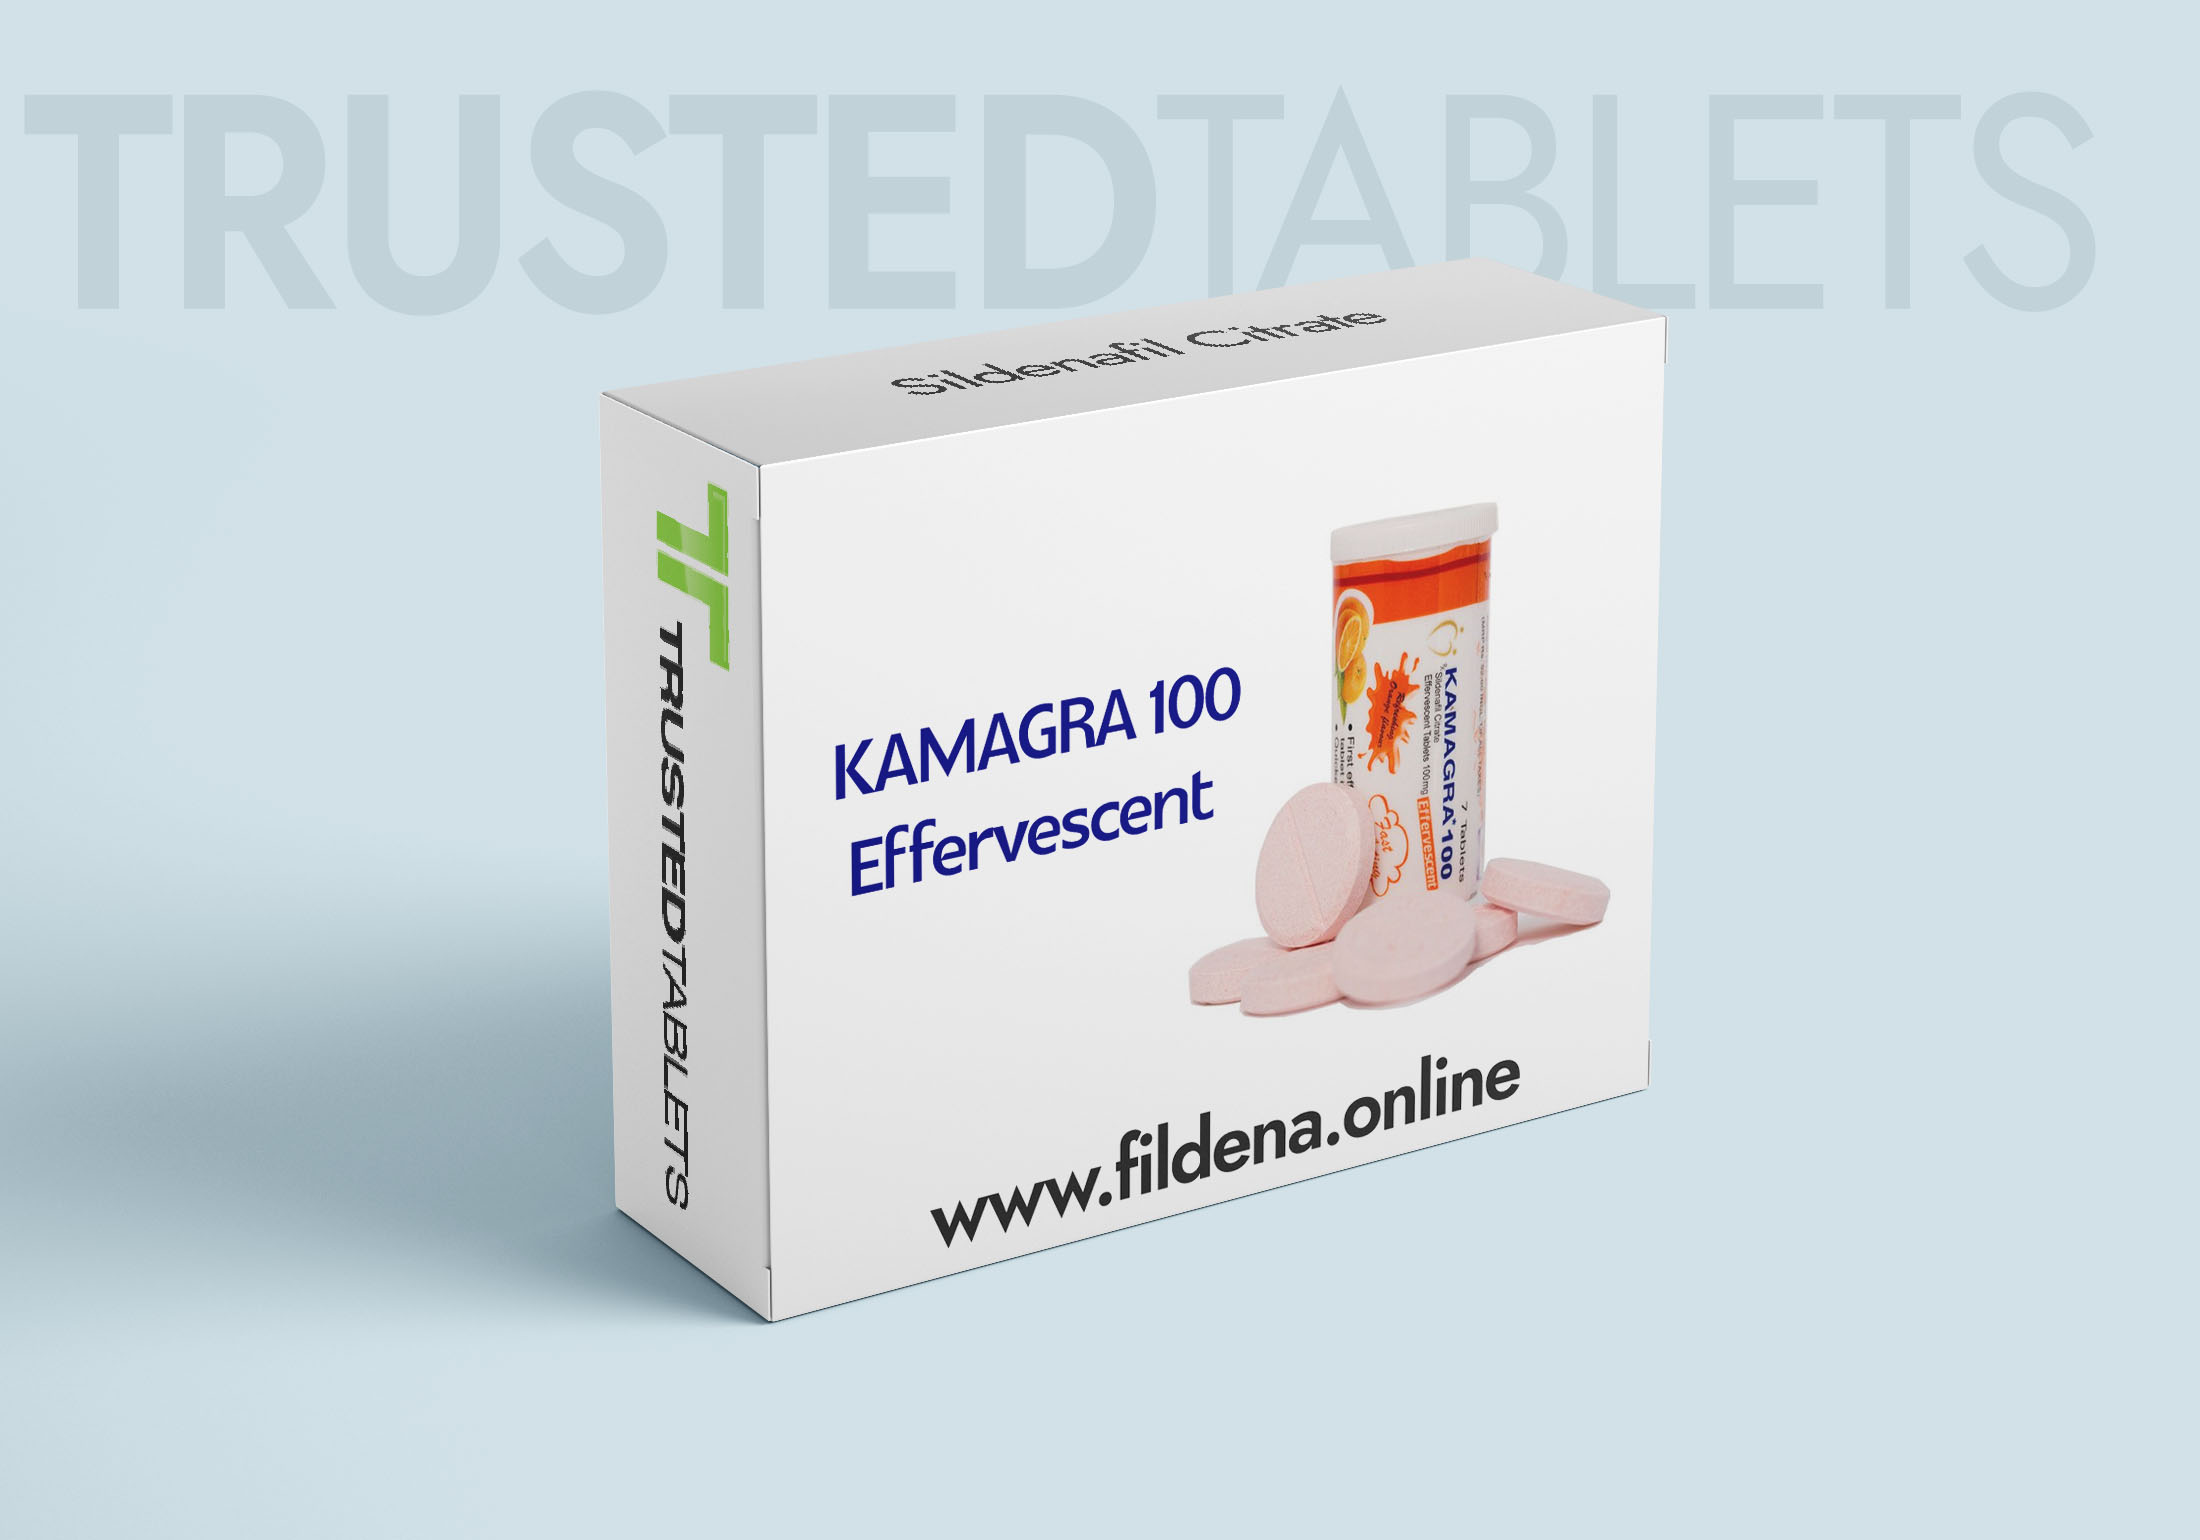 Kamagra Effervescent